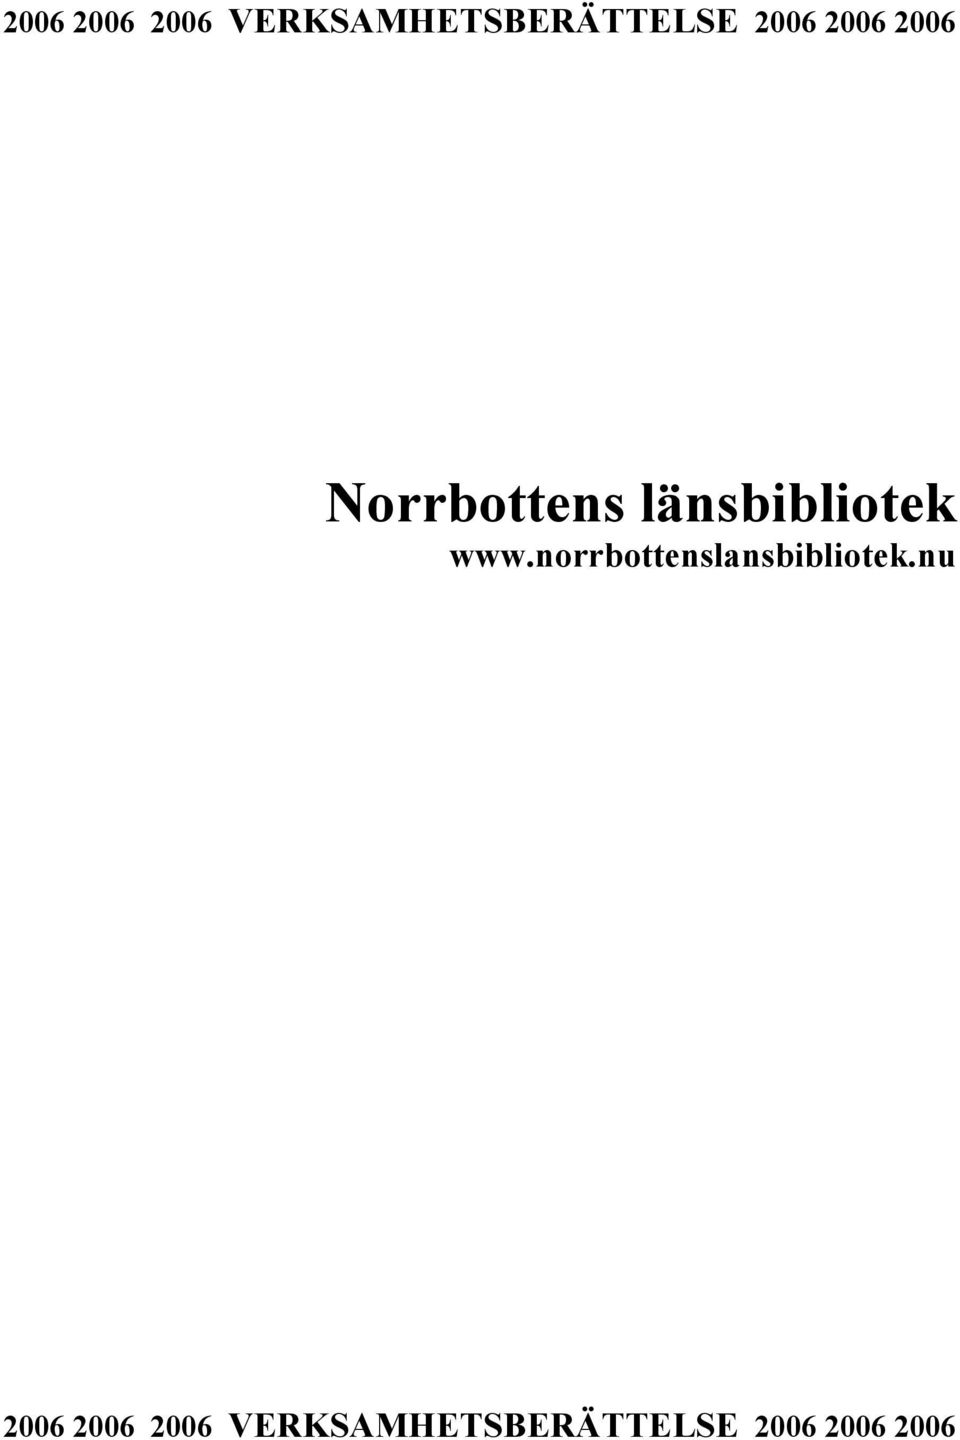 www.norrbottenslansbibliotek.